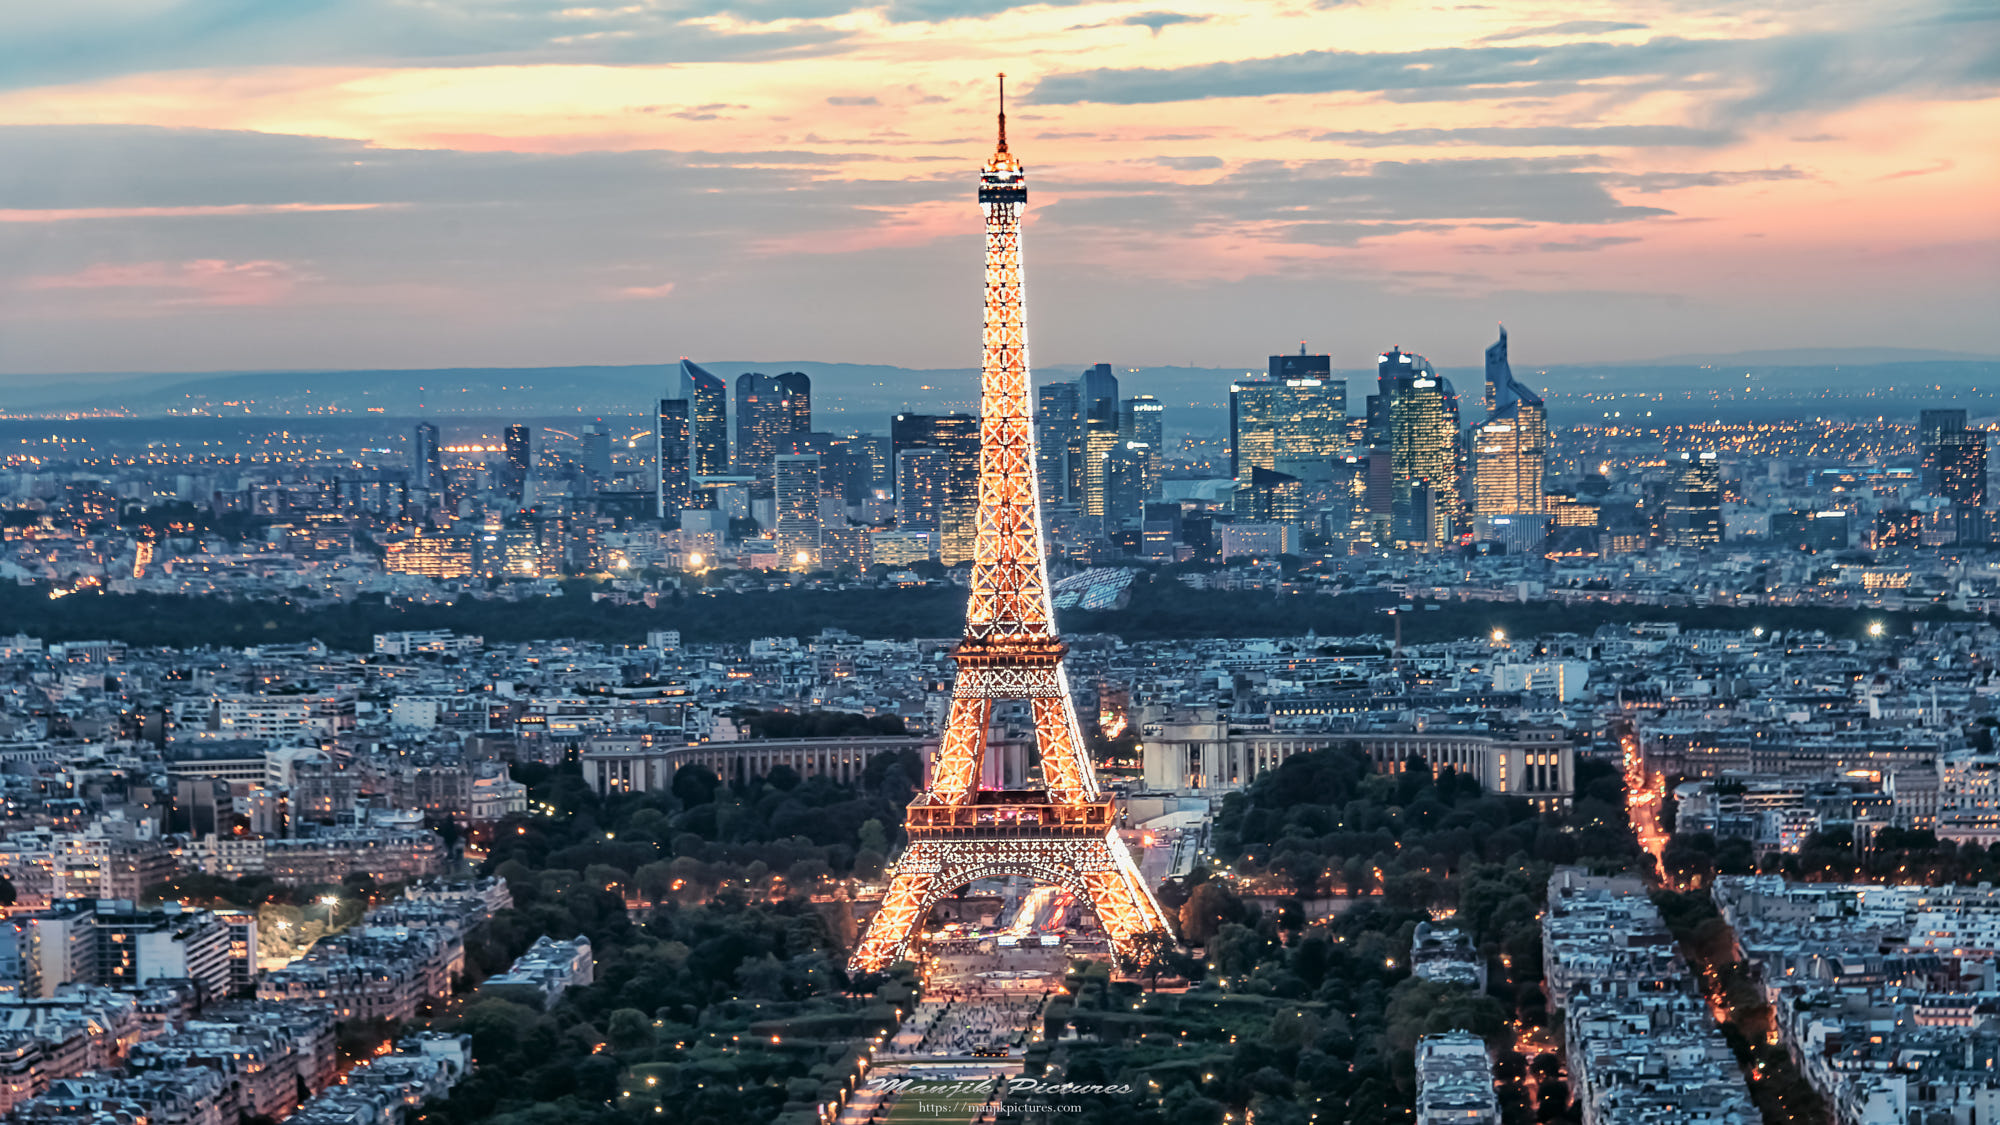 General 2000x1125 Paris garden cityscape city lights landmark Europe